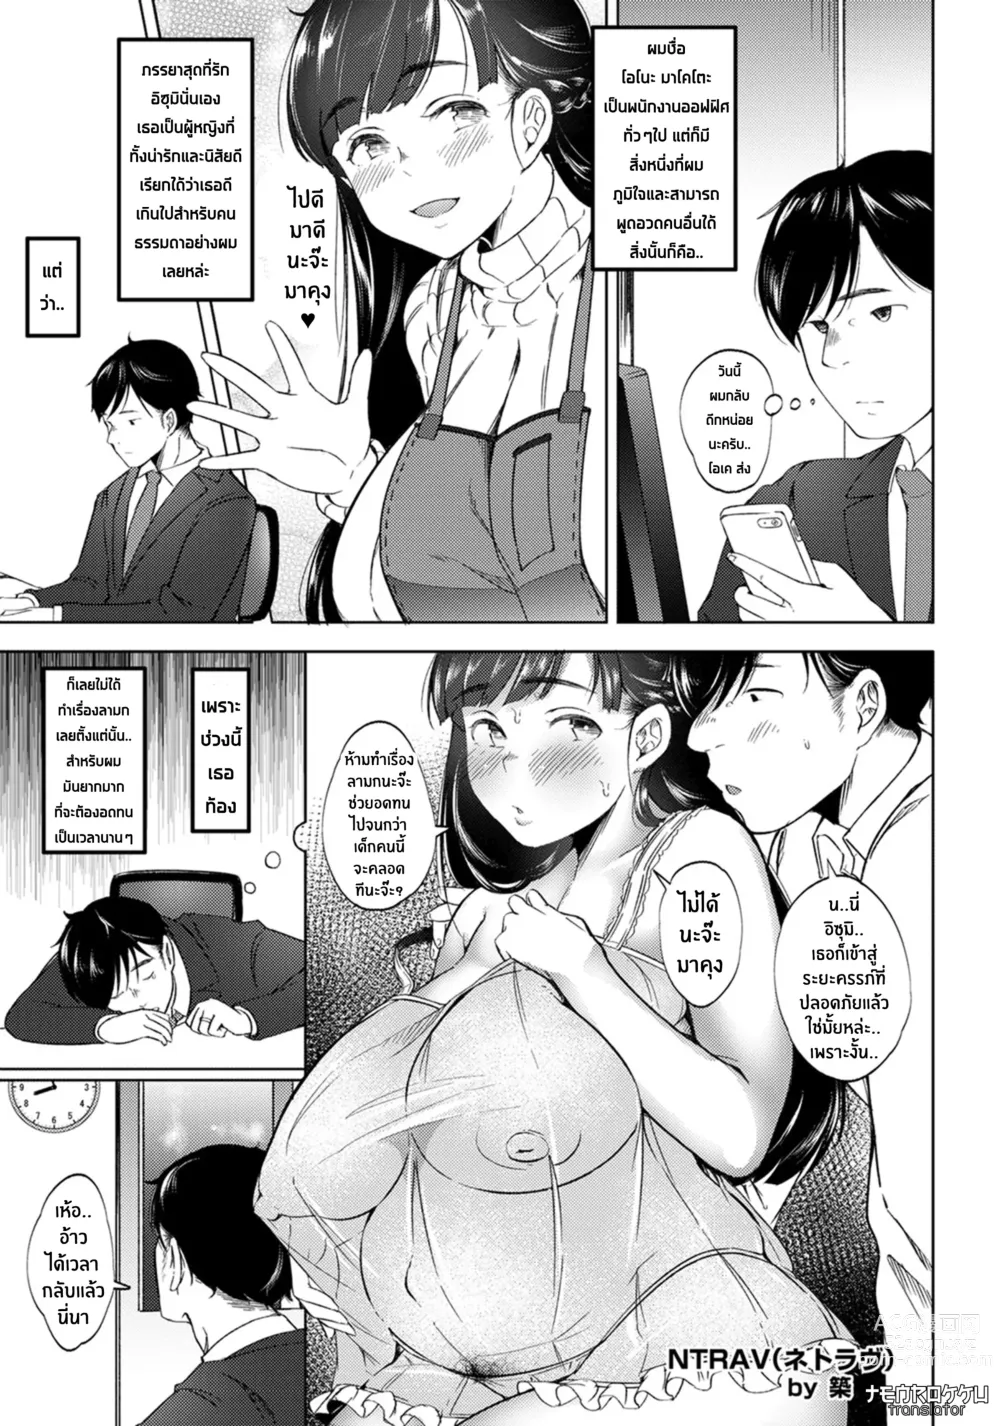 Page 1 of manga NTRAV ในหน้าจอนั้นเป็นภรรยาสุดที่รักของผมที่กำลังท้องอยู่